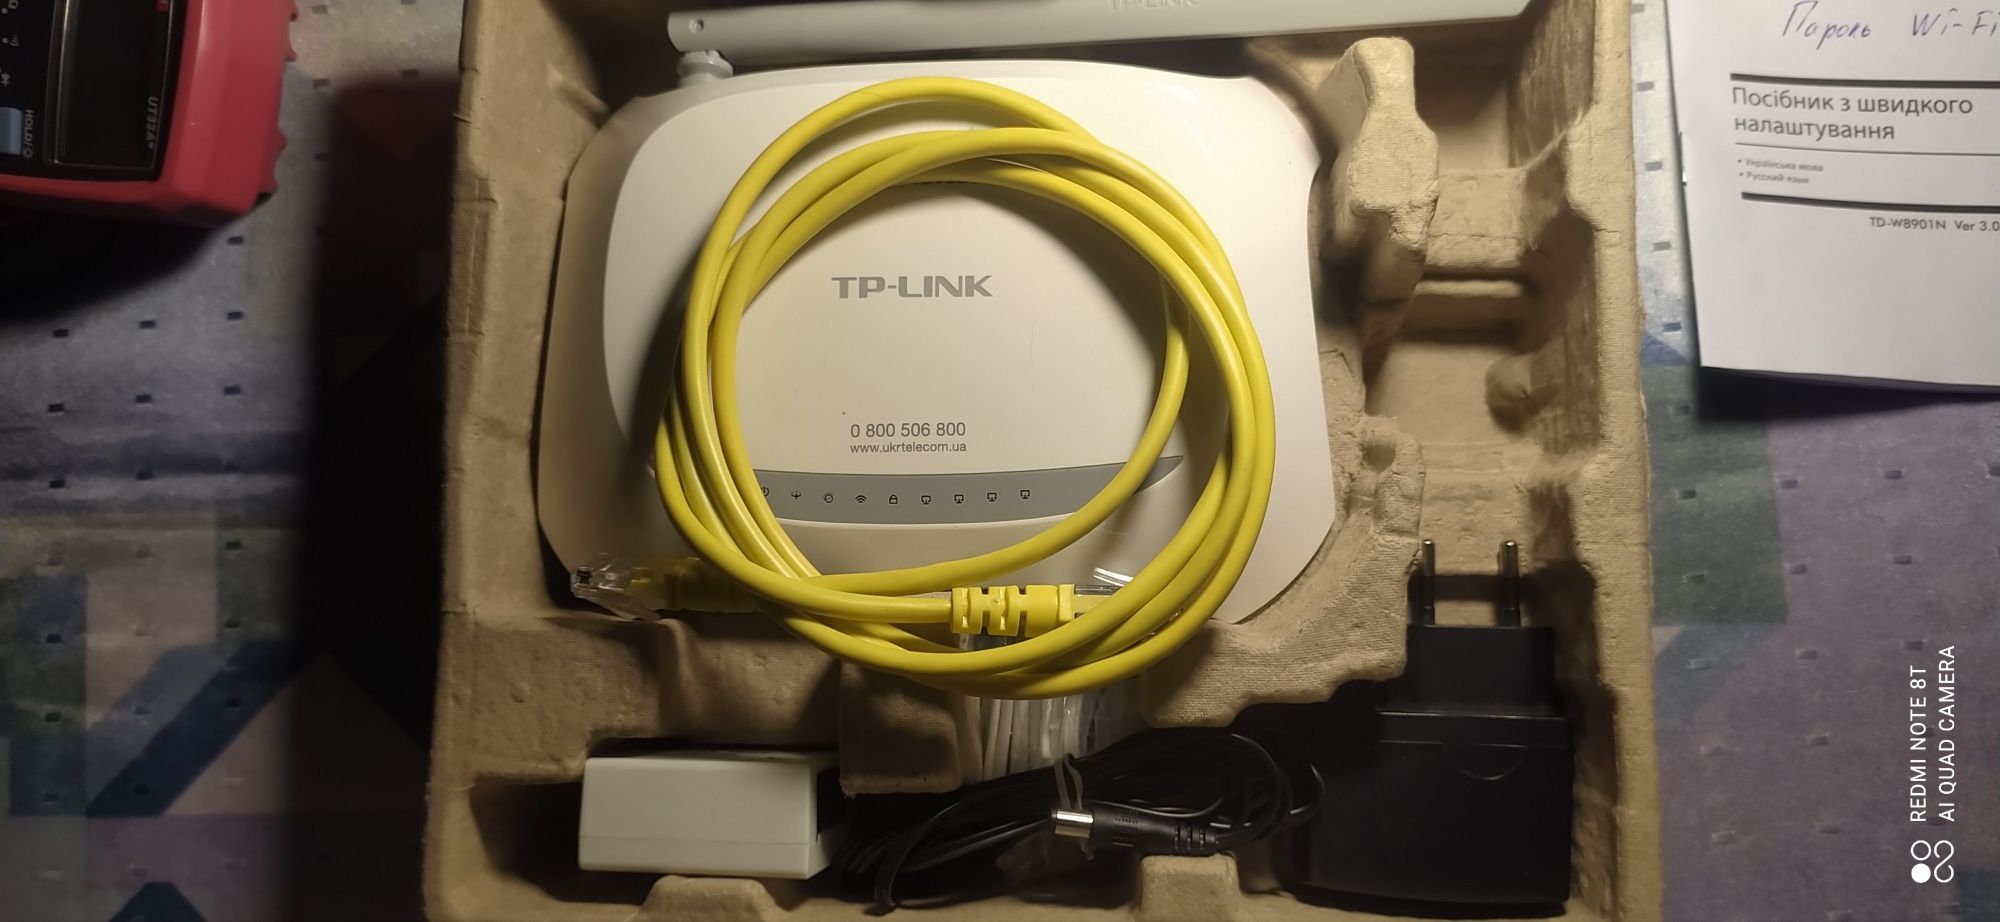 WiFi модем tp-link td8901n